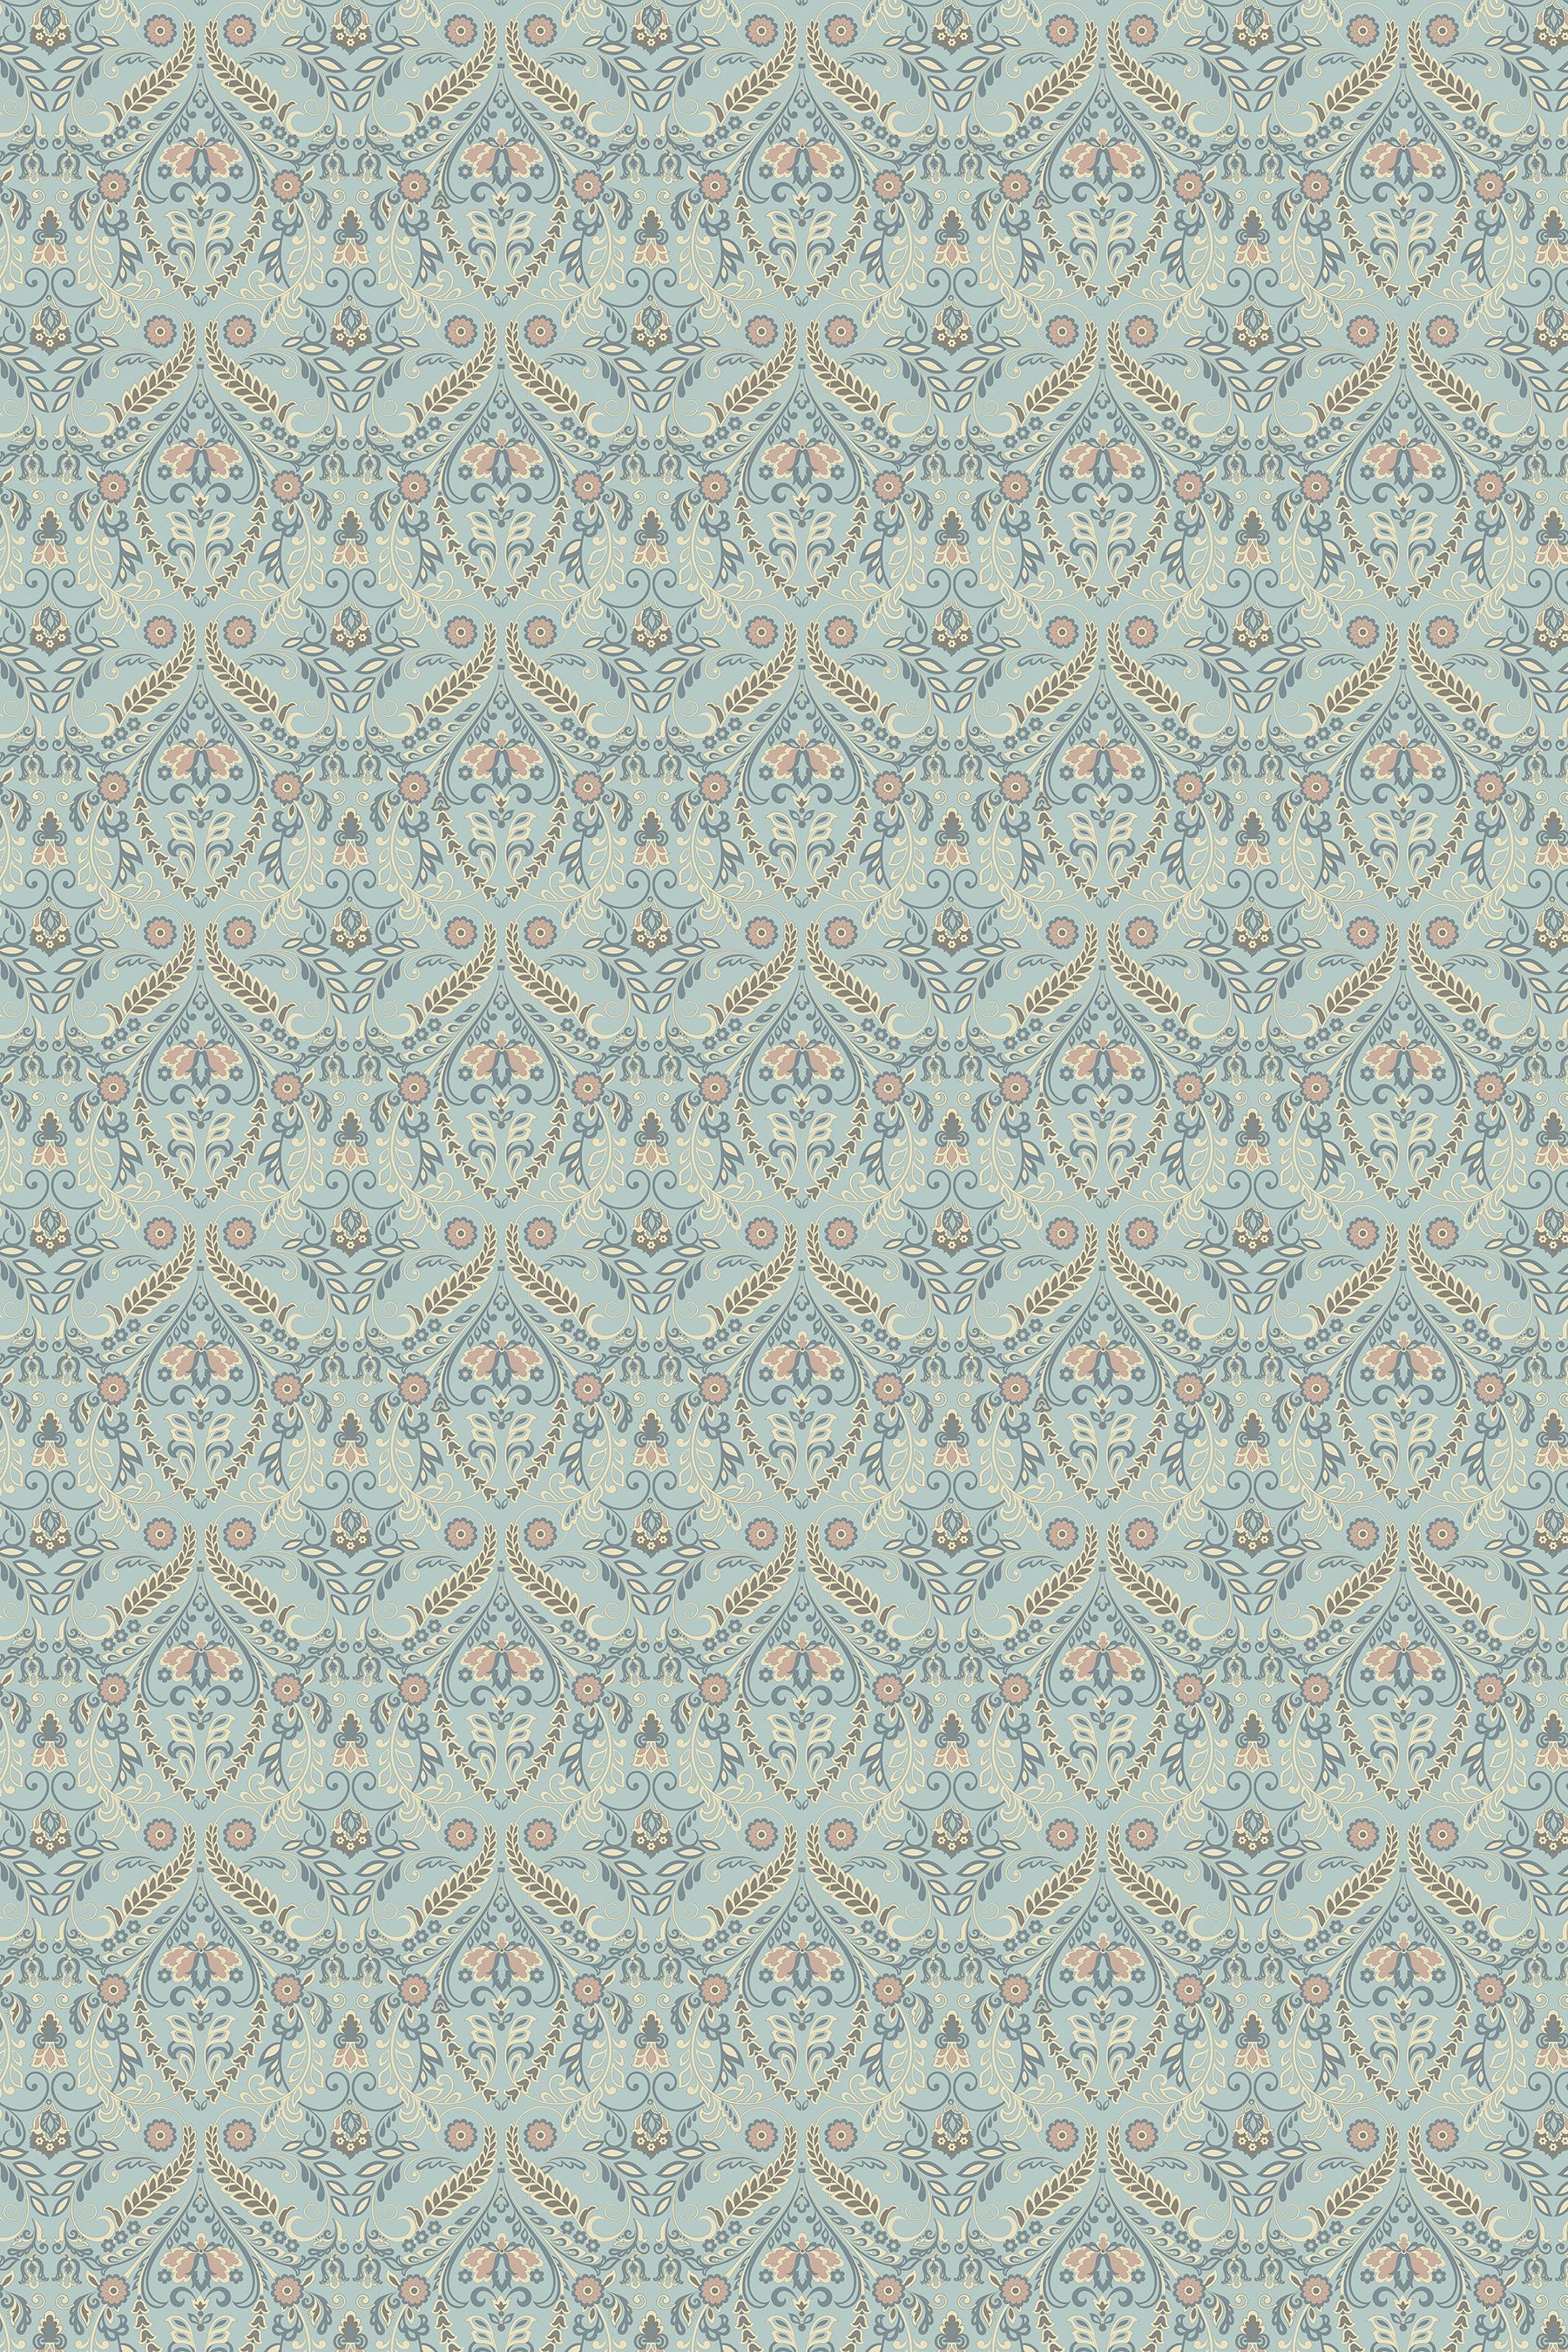 Ornamental Print Blue Cotton Table Cover